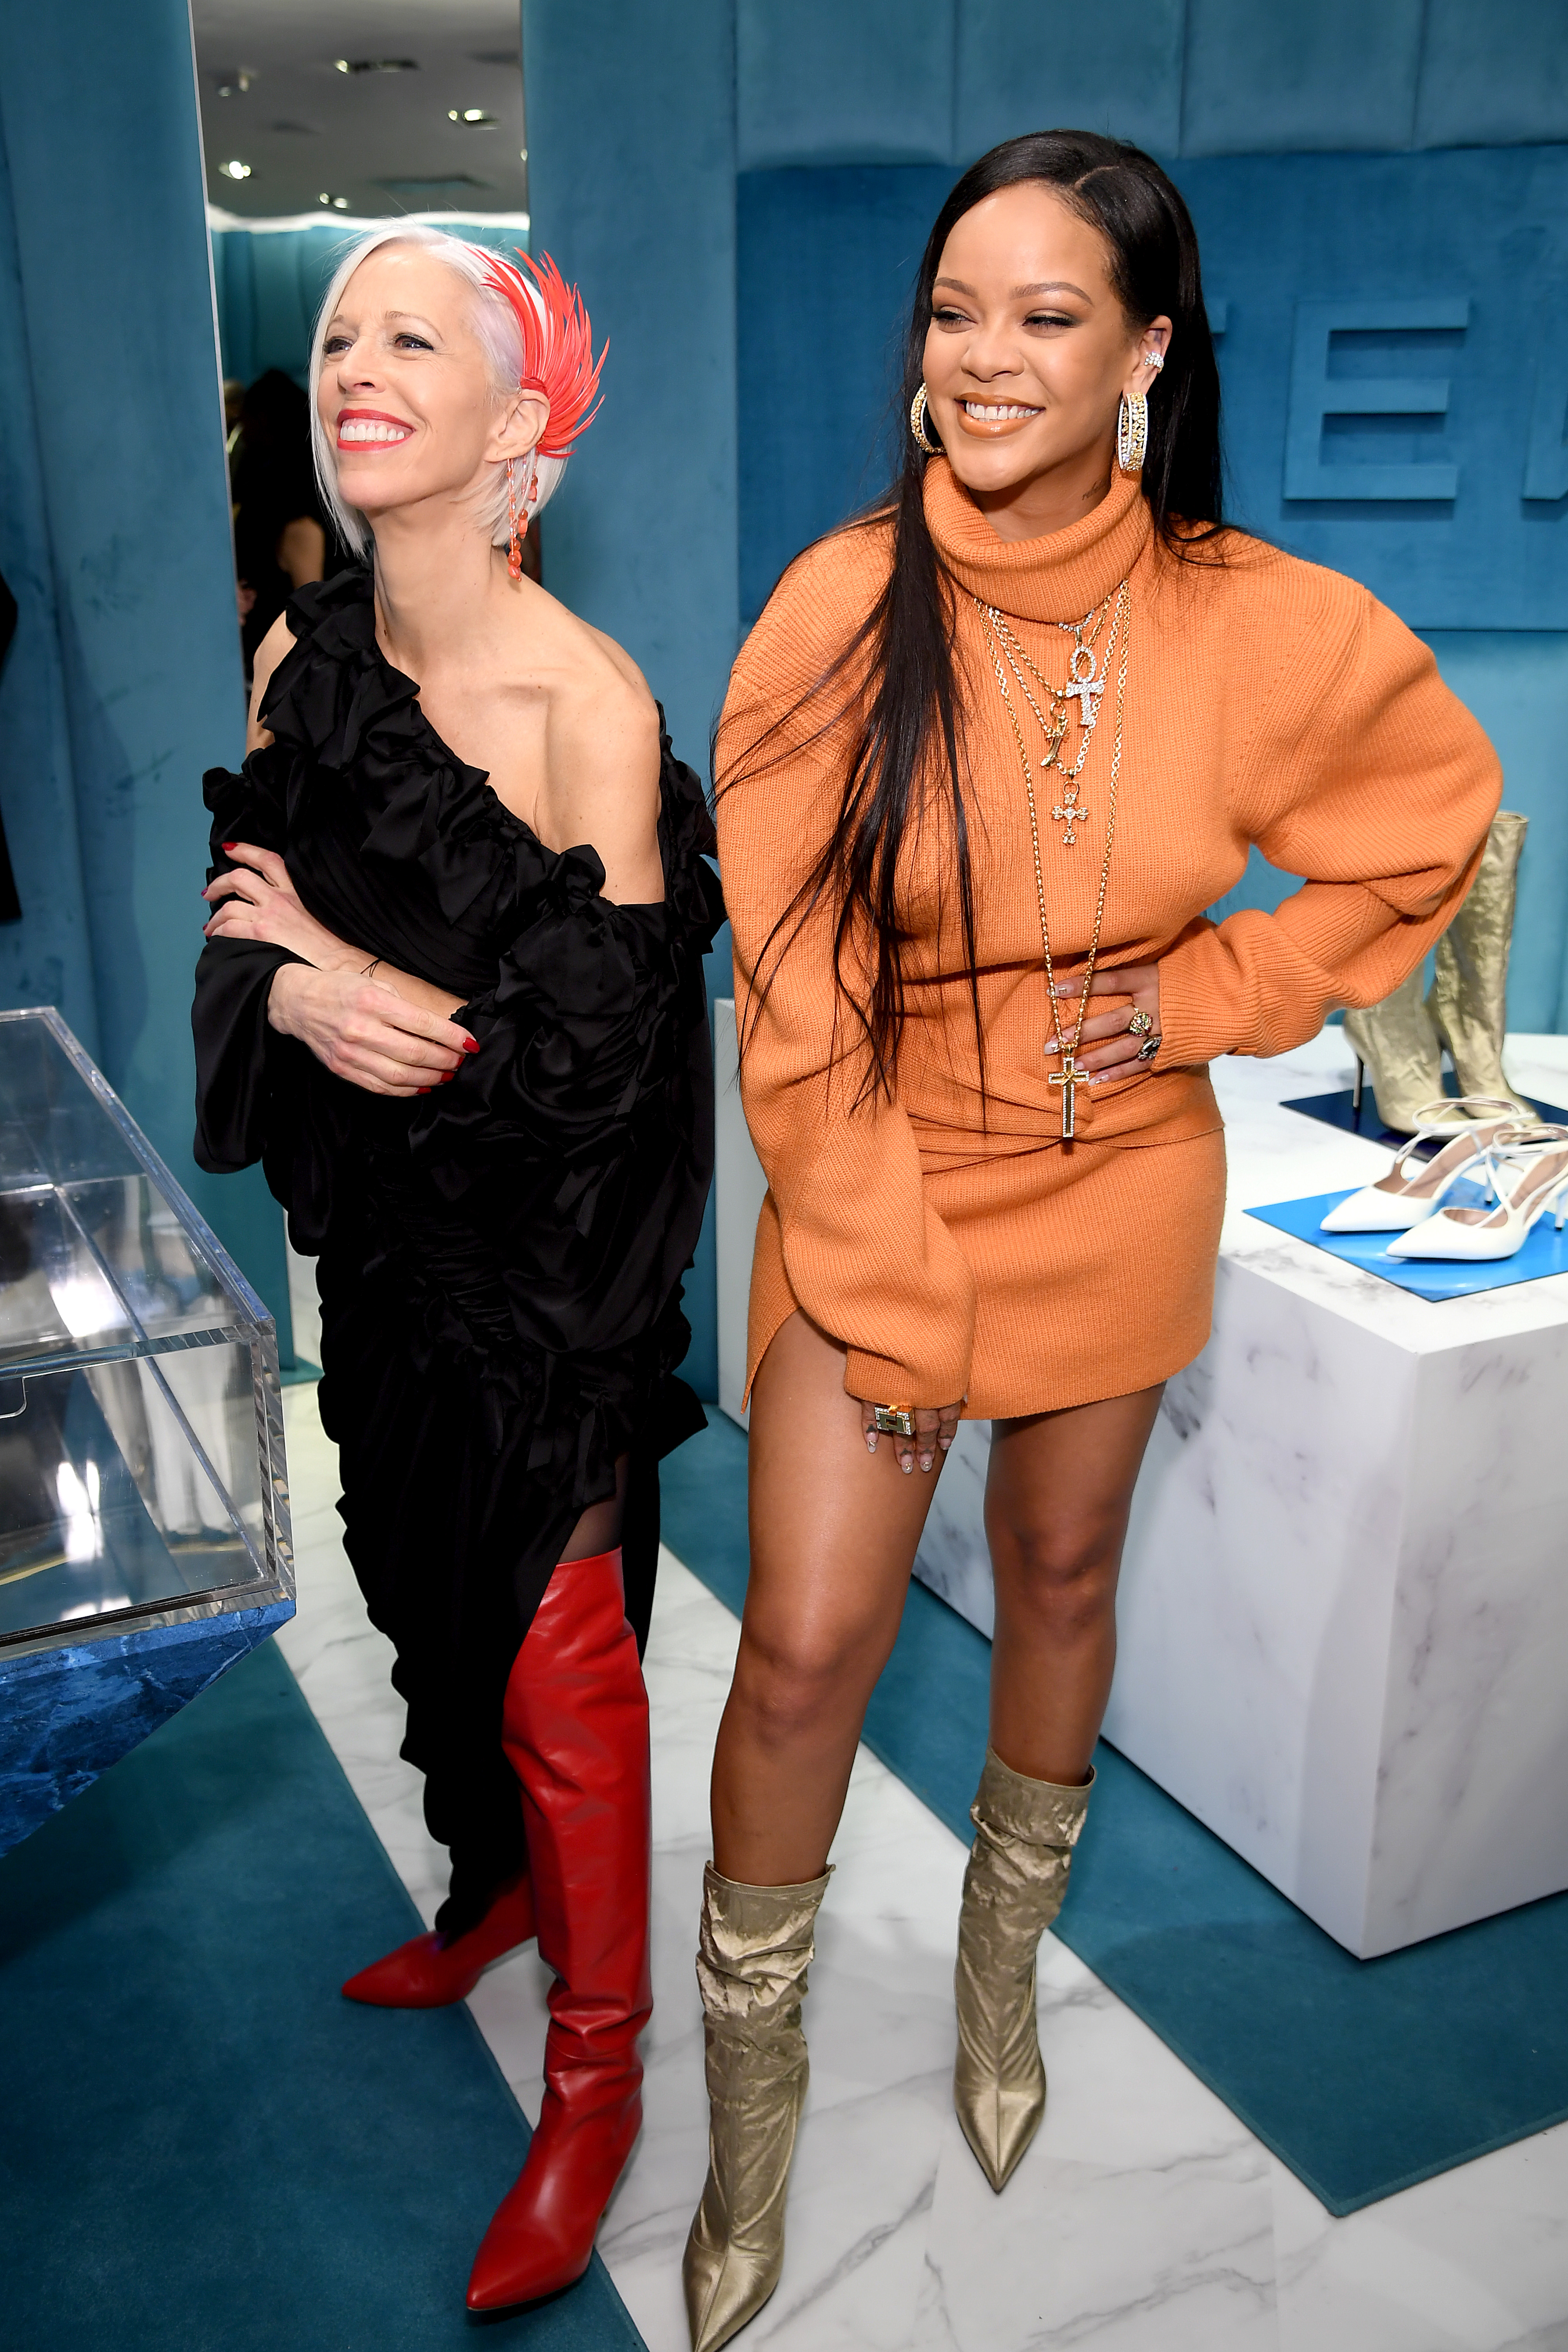 Robyn Rihanna Fenty and Linda Fargo Celebrate the Launch of FENTY at Bergdorf Goodman